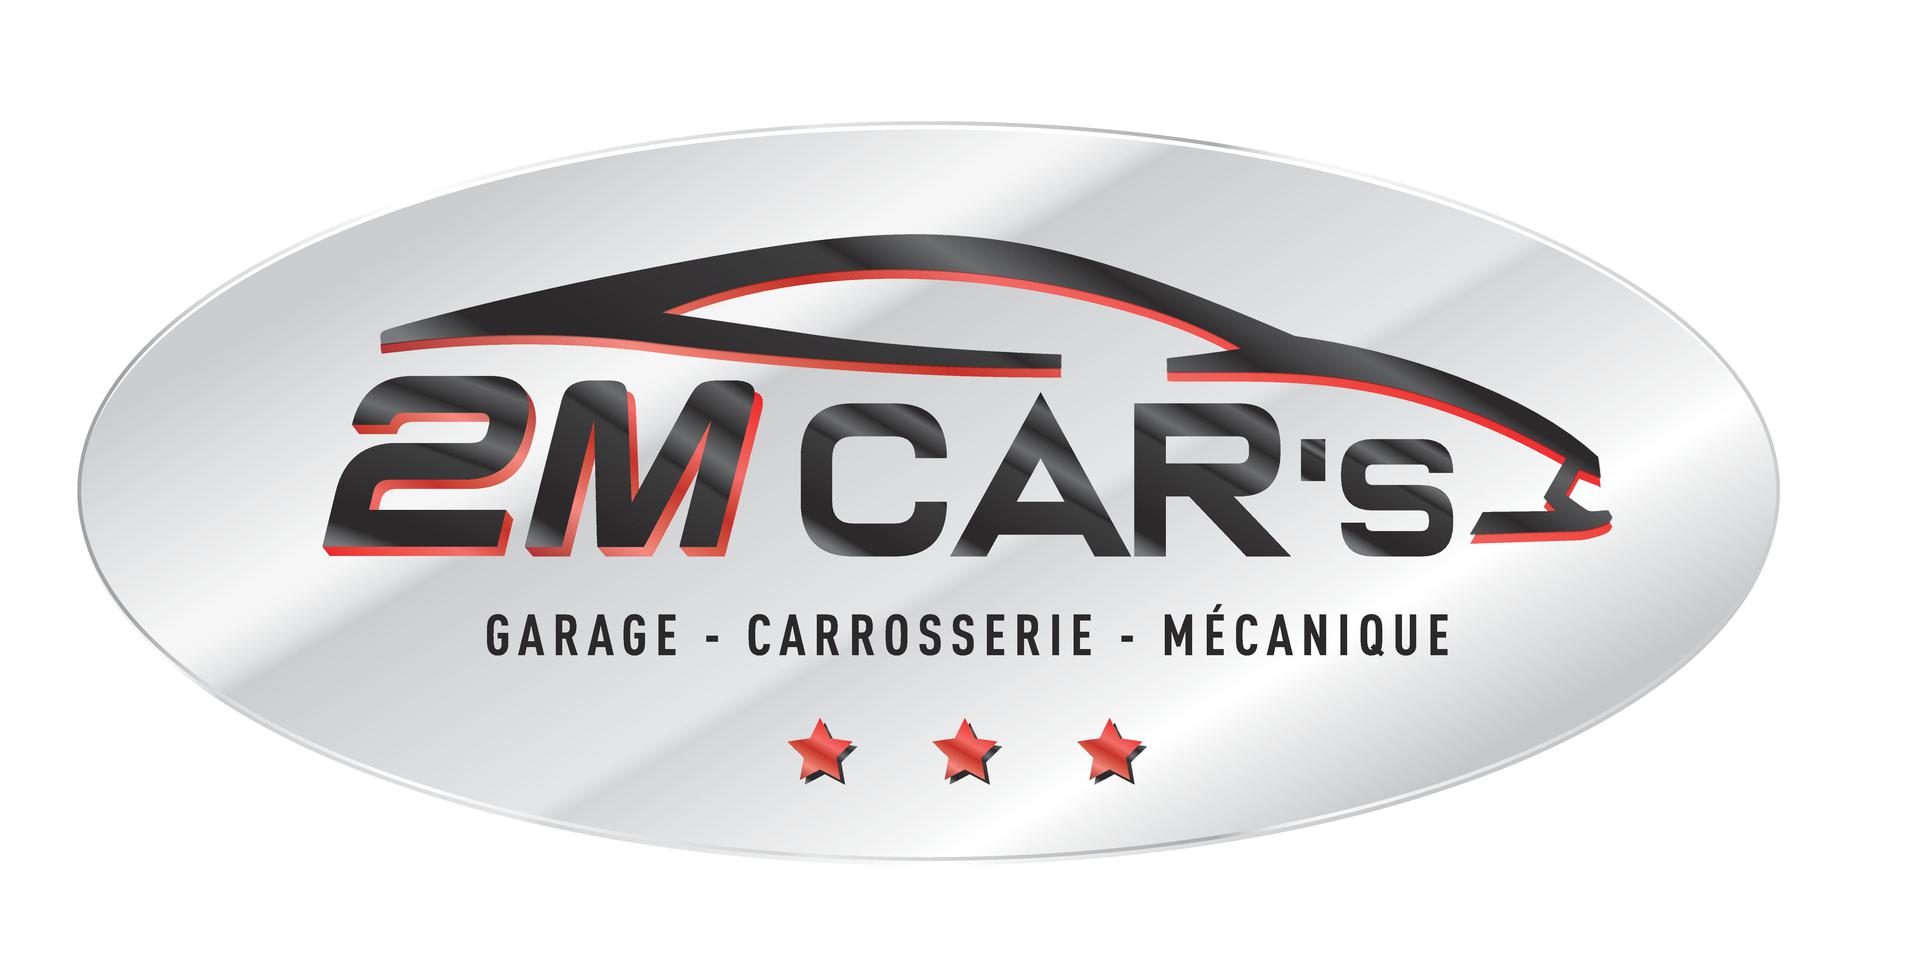 2M CAR'S garage et station-service (outillage, installation, équipement)